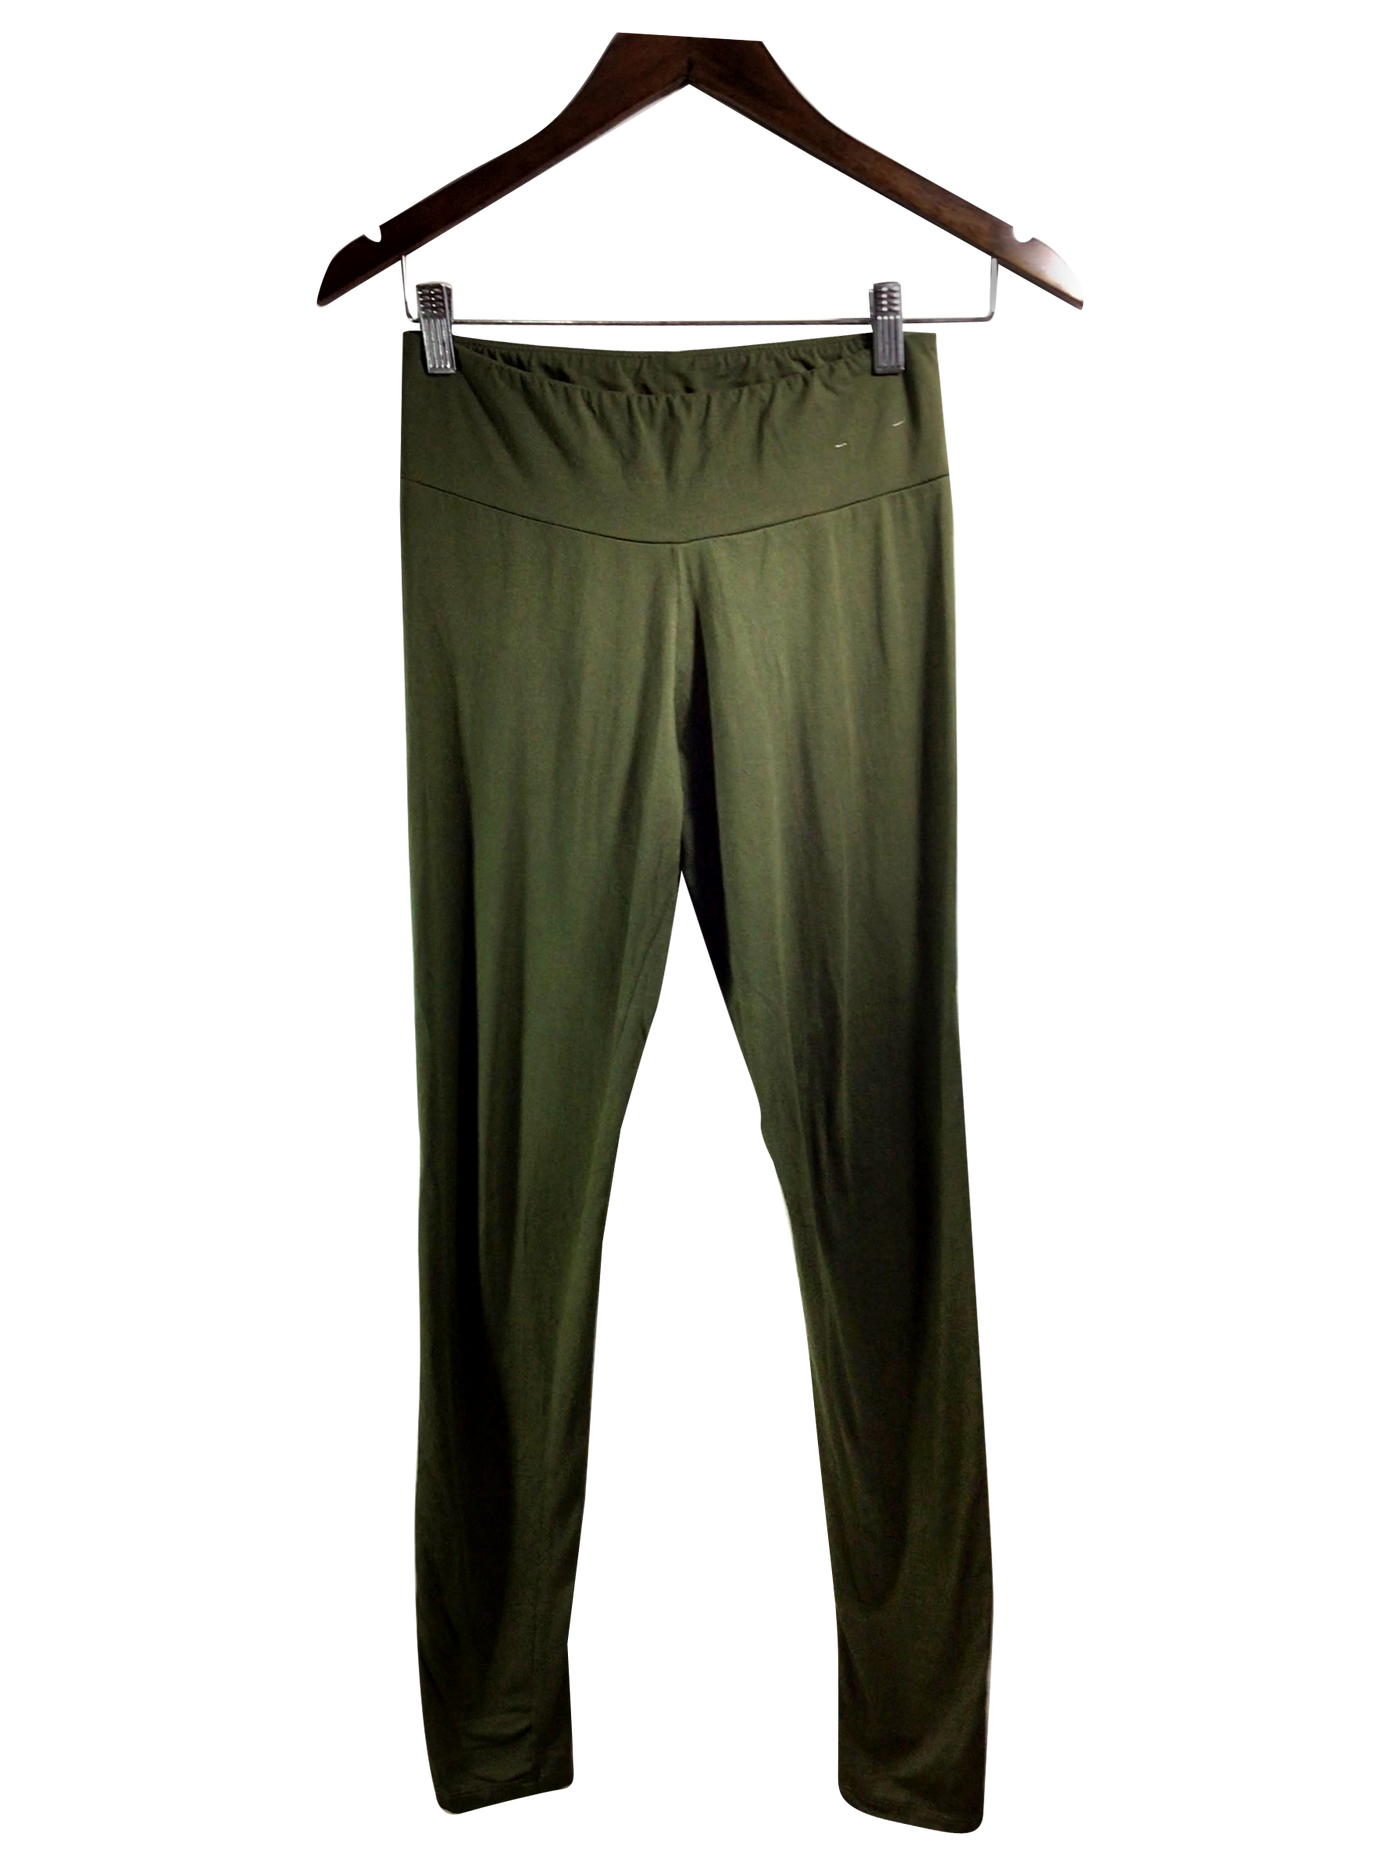 STREETWEAR SOCIETY Activewear Legging Regular fit in Green - Size M | 7.14 $ KOOP